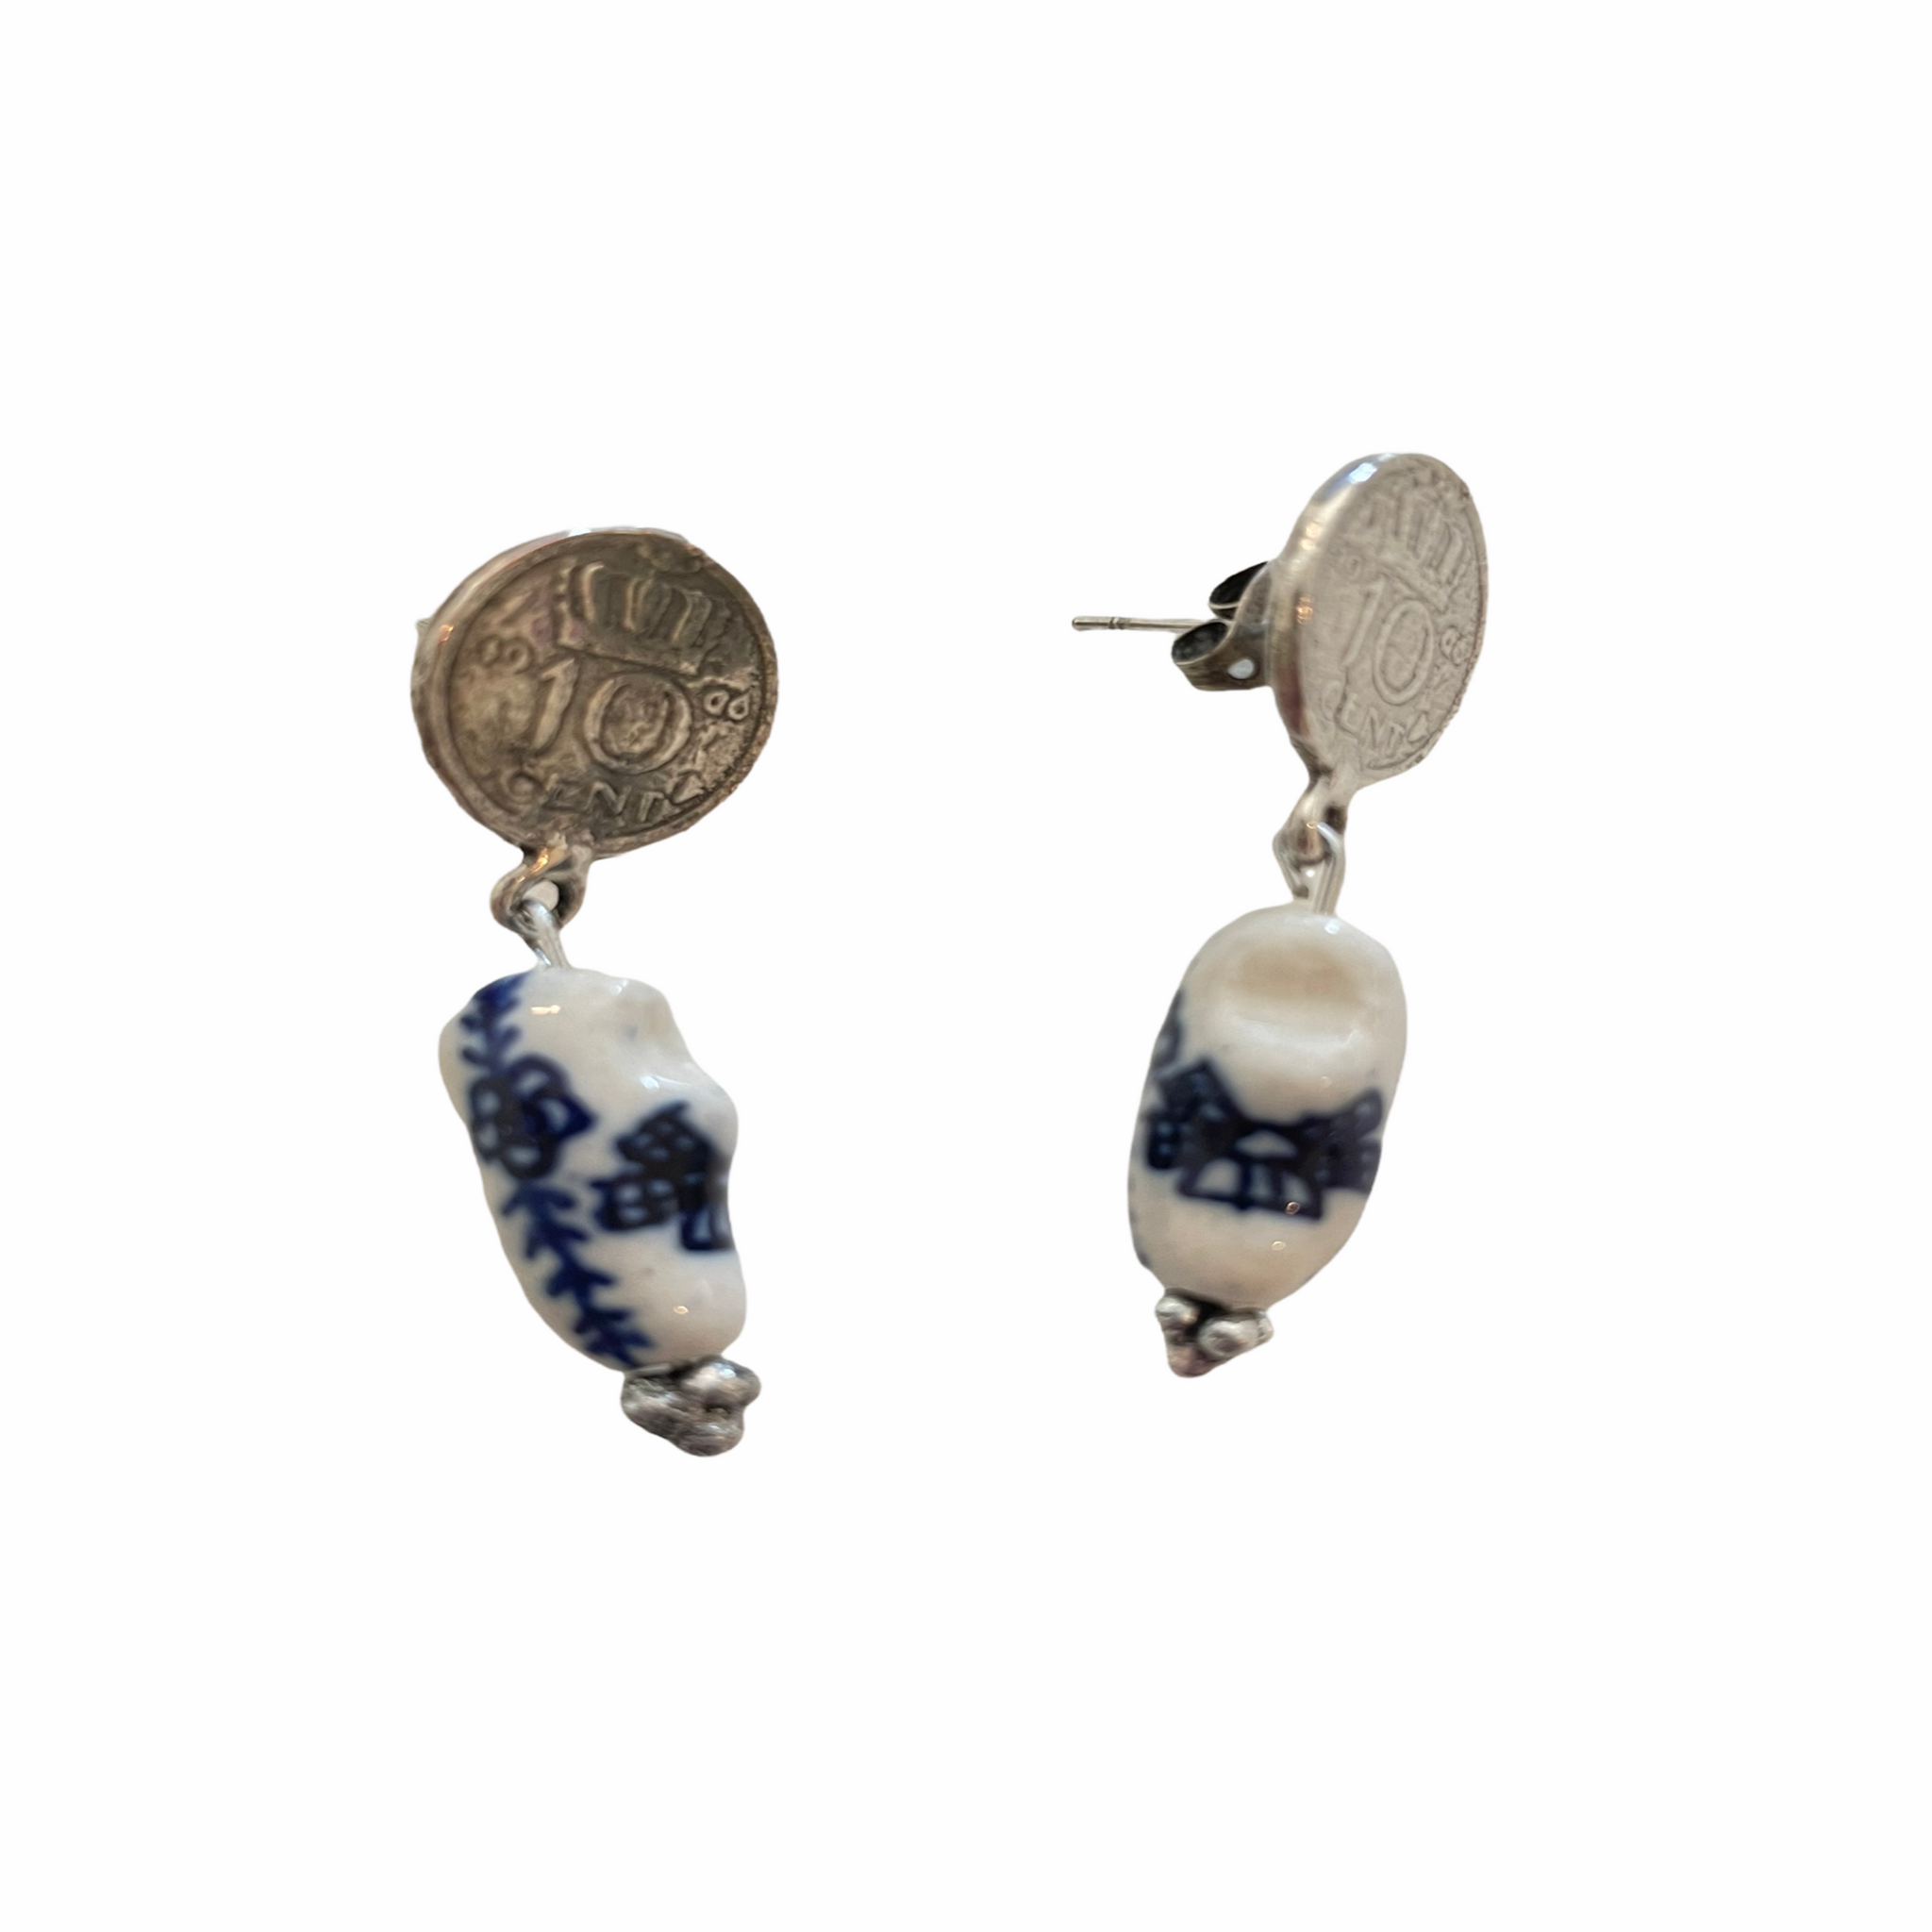 Delft blue ceramic earrings 10 cents